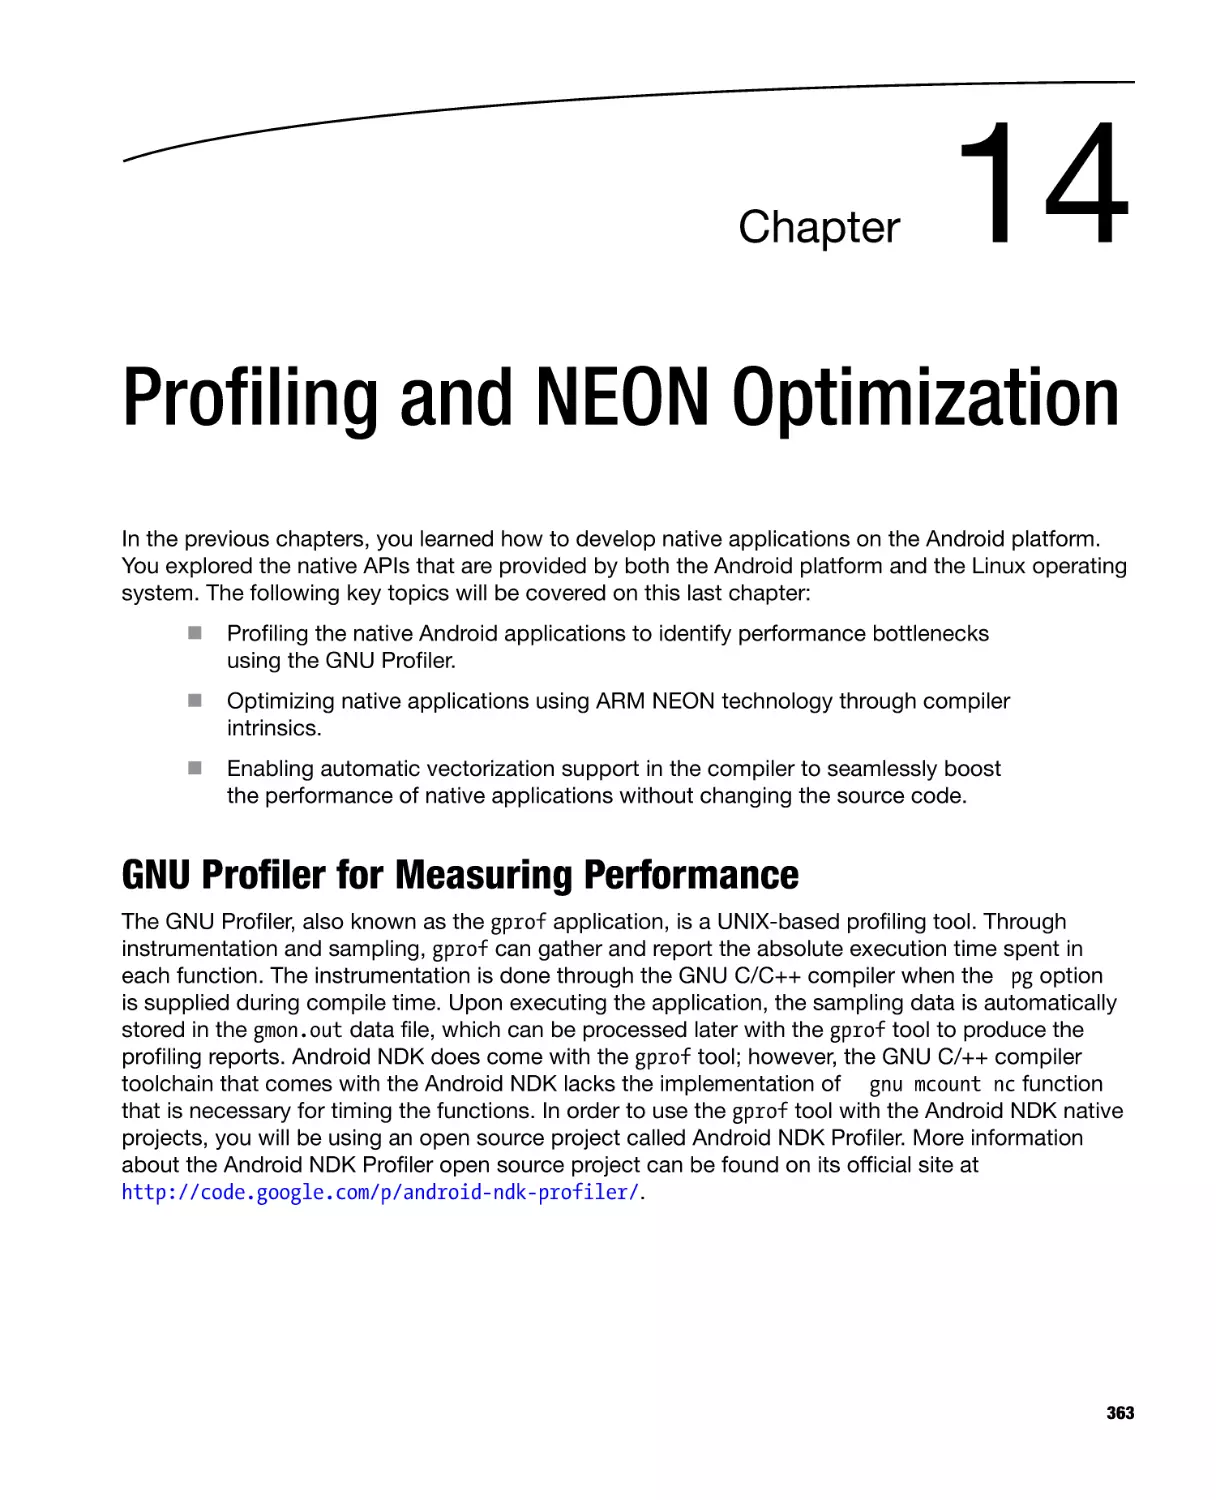 Chapter 14
GNU Profiler for Measuring Performance